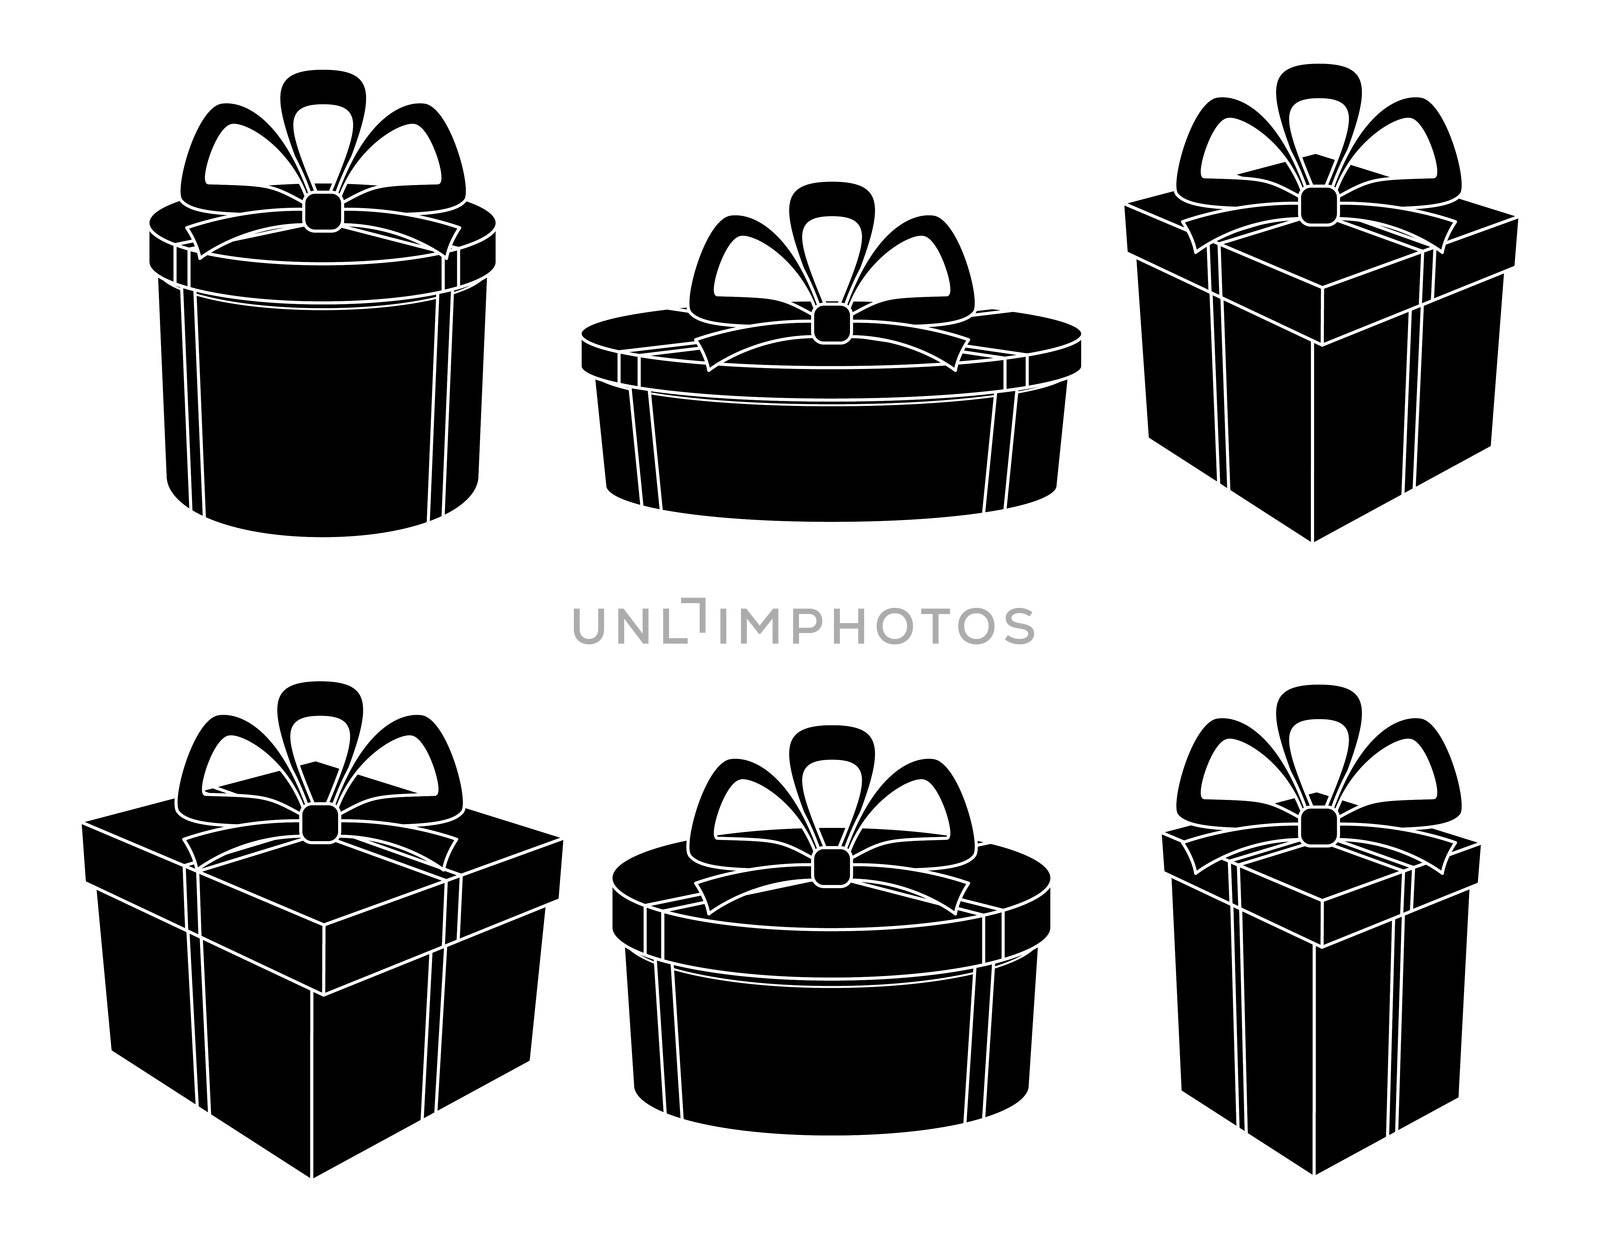 Boxes, black silhouettes by alexcoolok